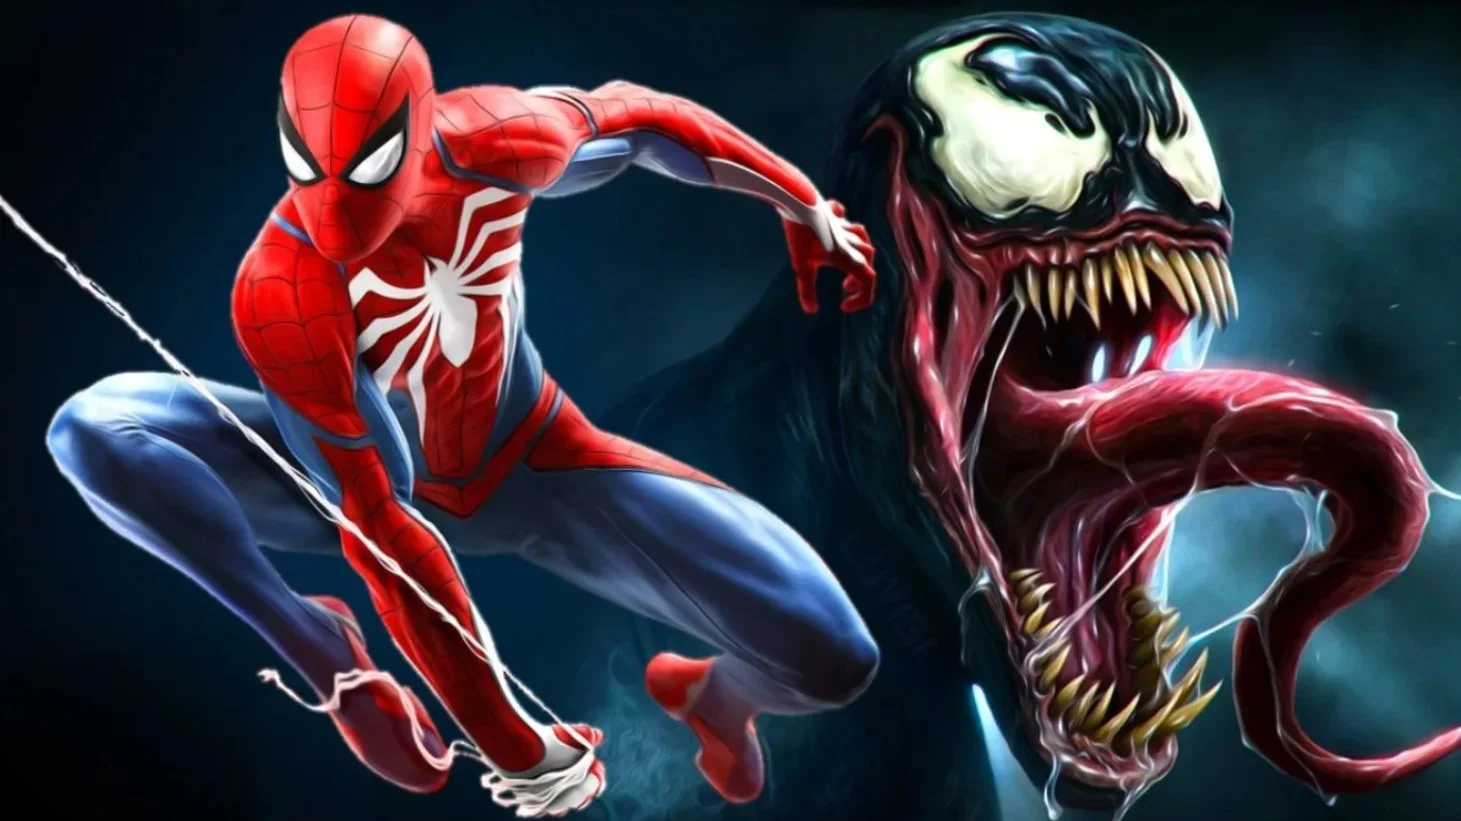 Images of Marvel's Spider-Man 2 start screens have appeared online